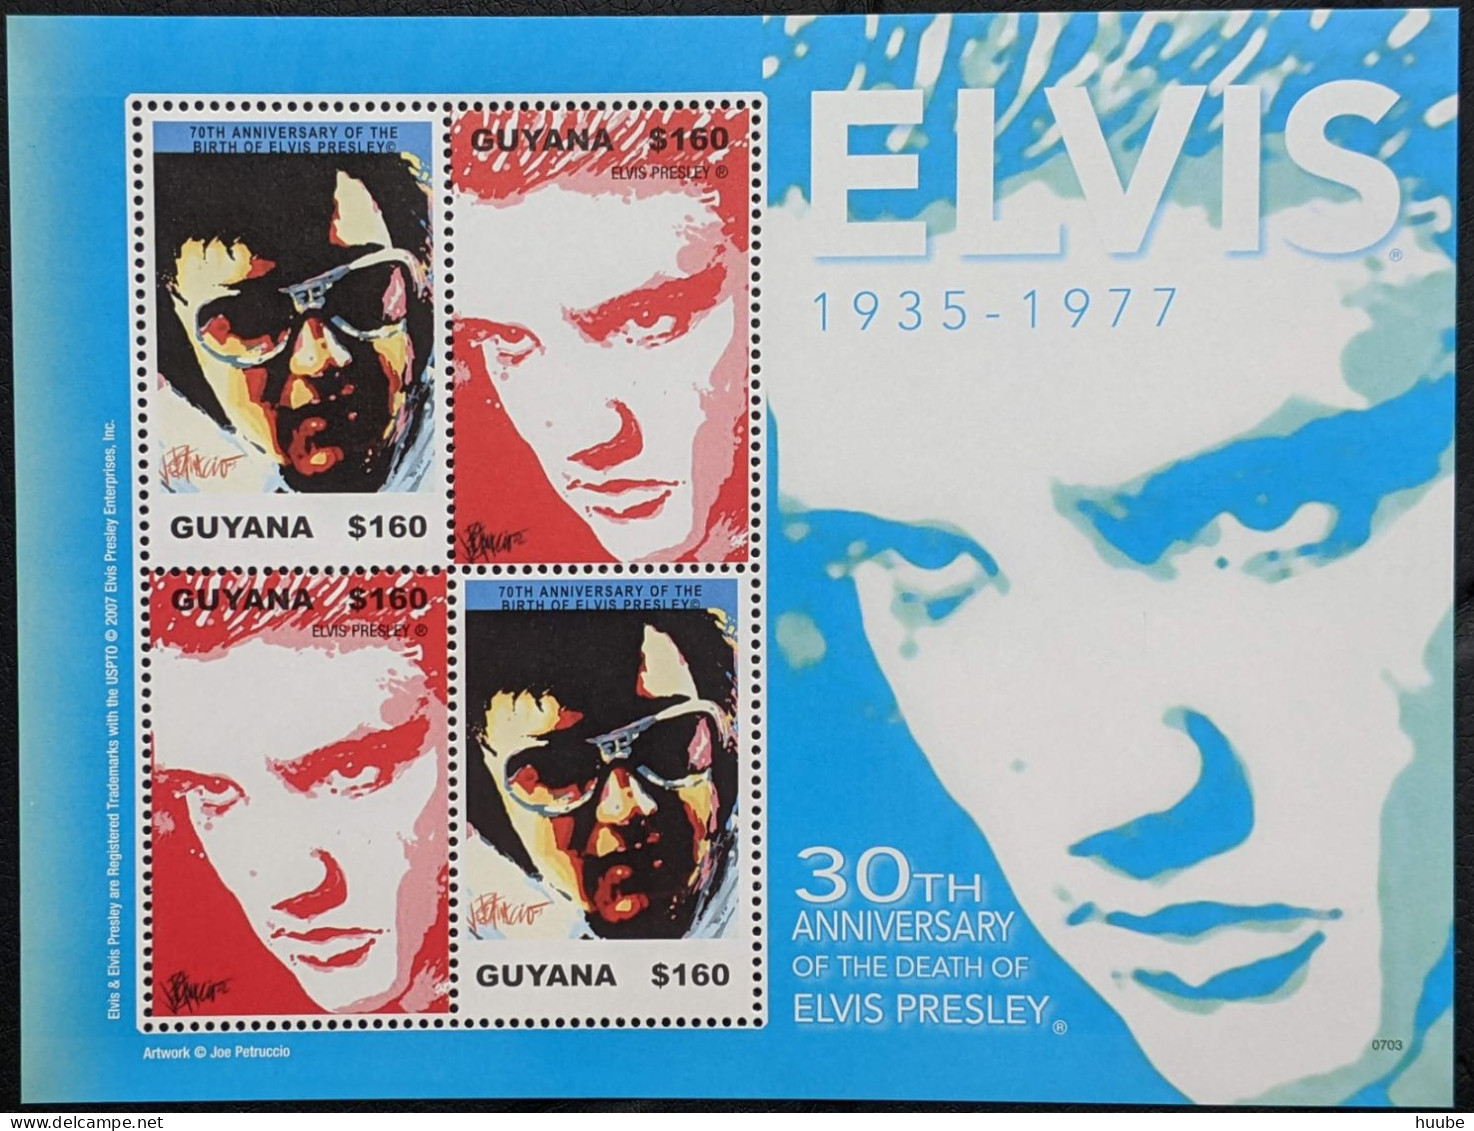 Guyana, 2007, Mi 7944-7947, 30th Anniversary Of The Death Of Elvis Presley, 2 Sheets Of 4v, MNH - Elvis Presley